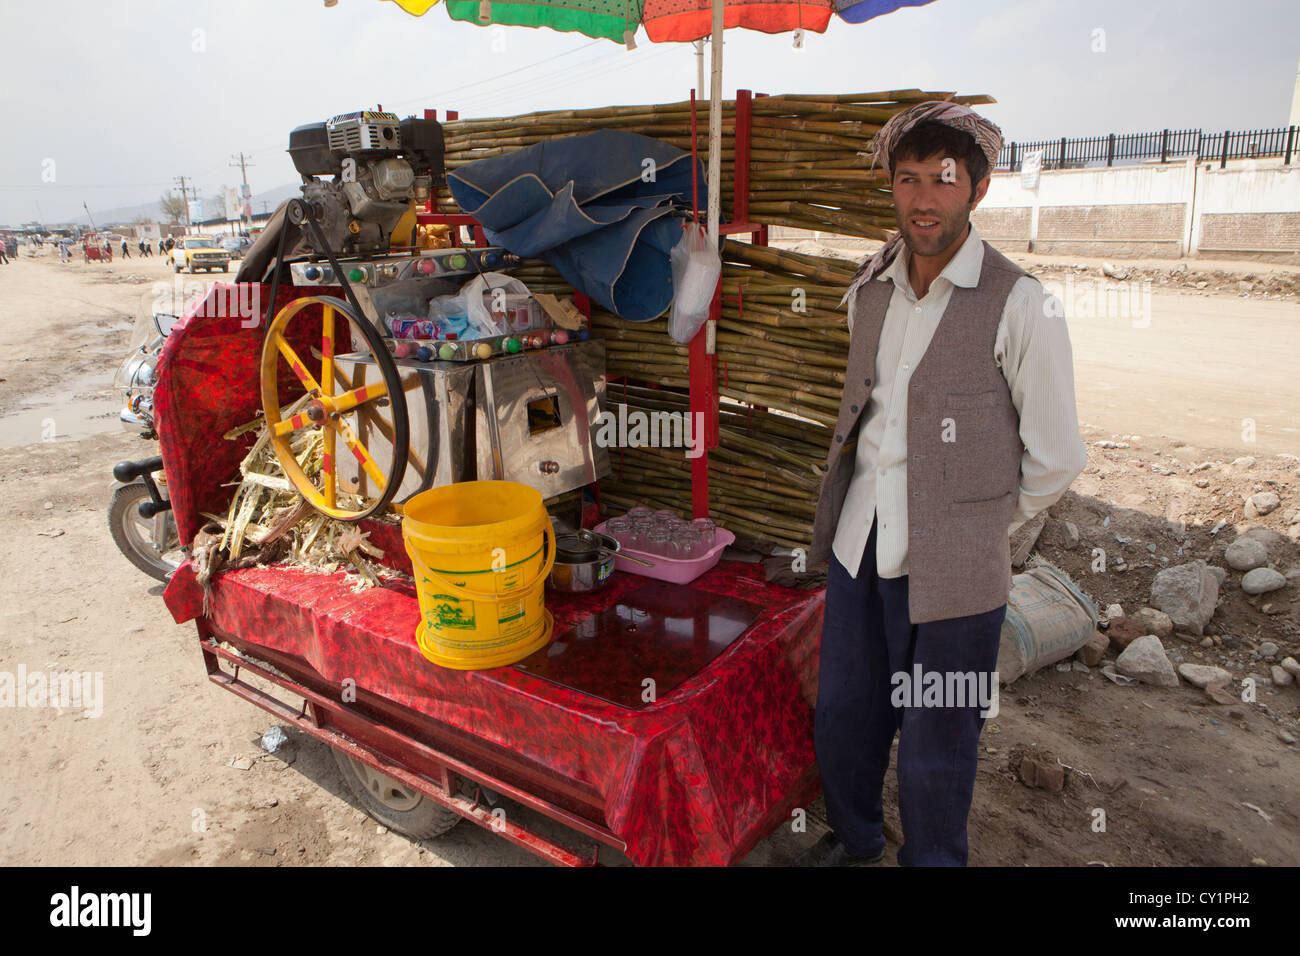 sugare cane slaes man in kabul Stock Photo